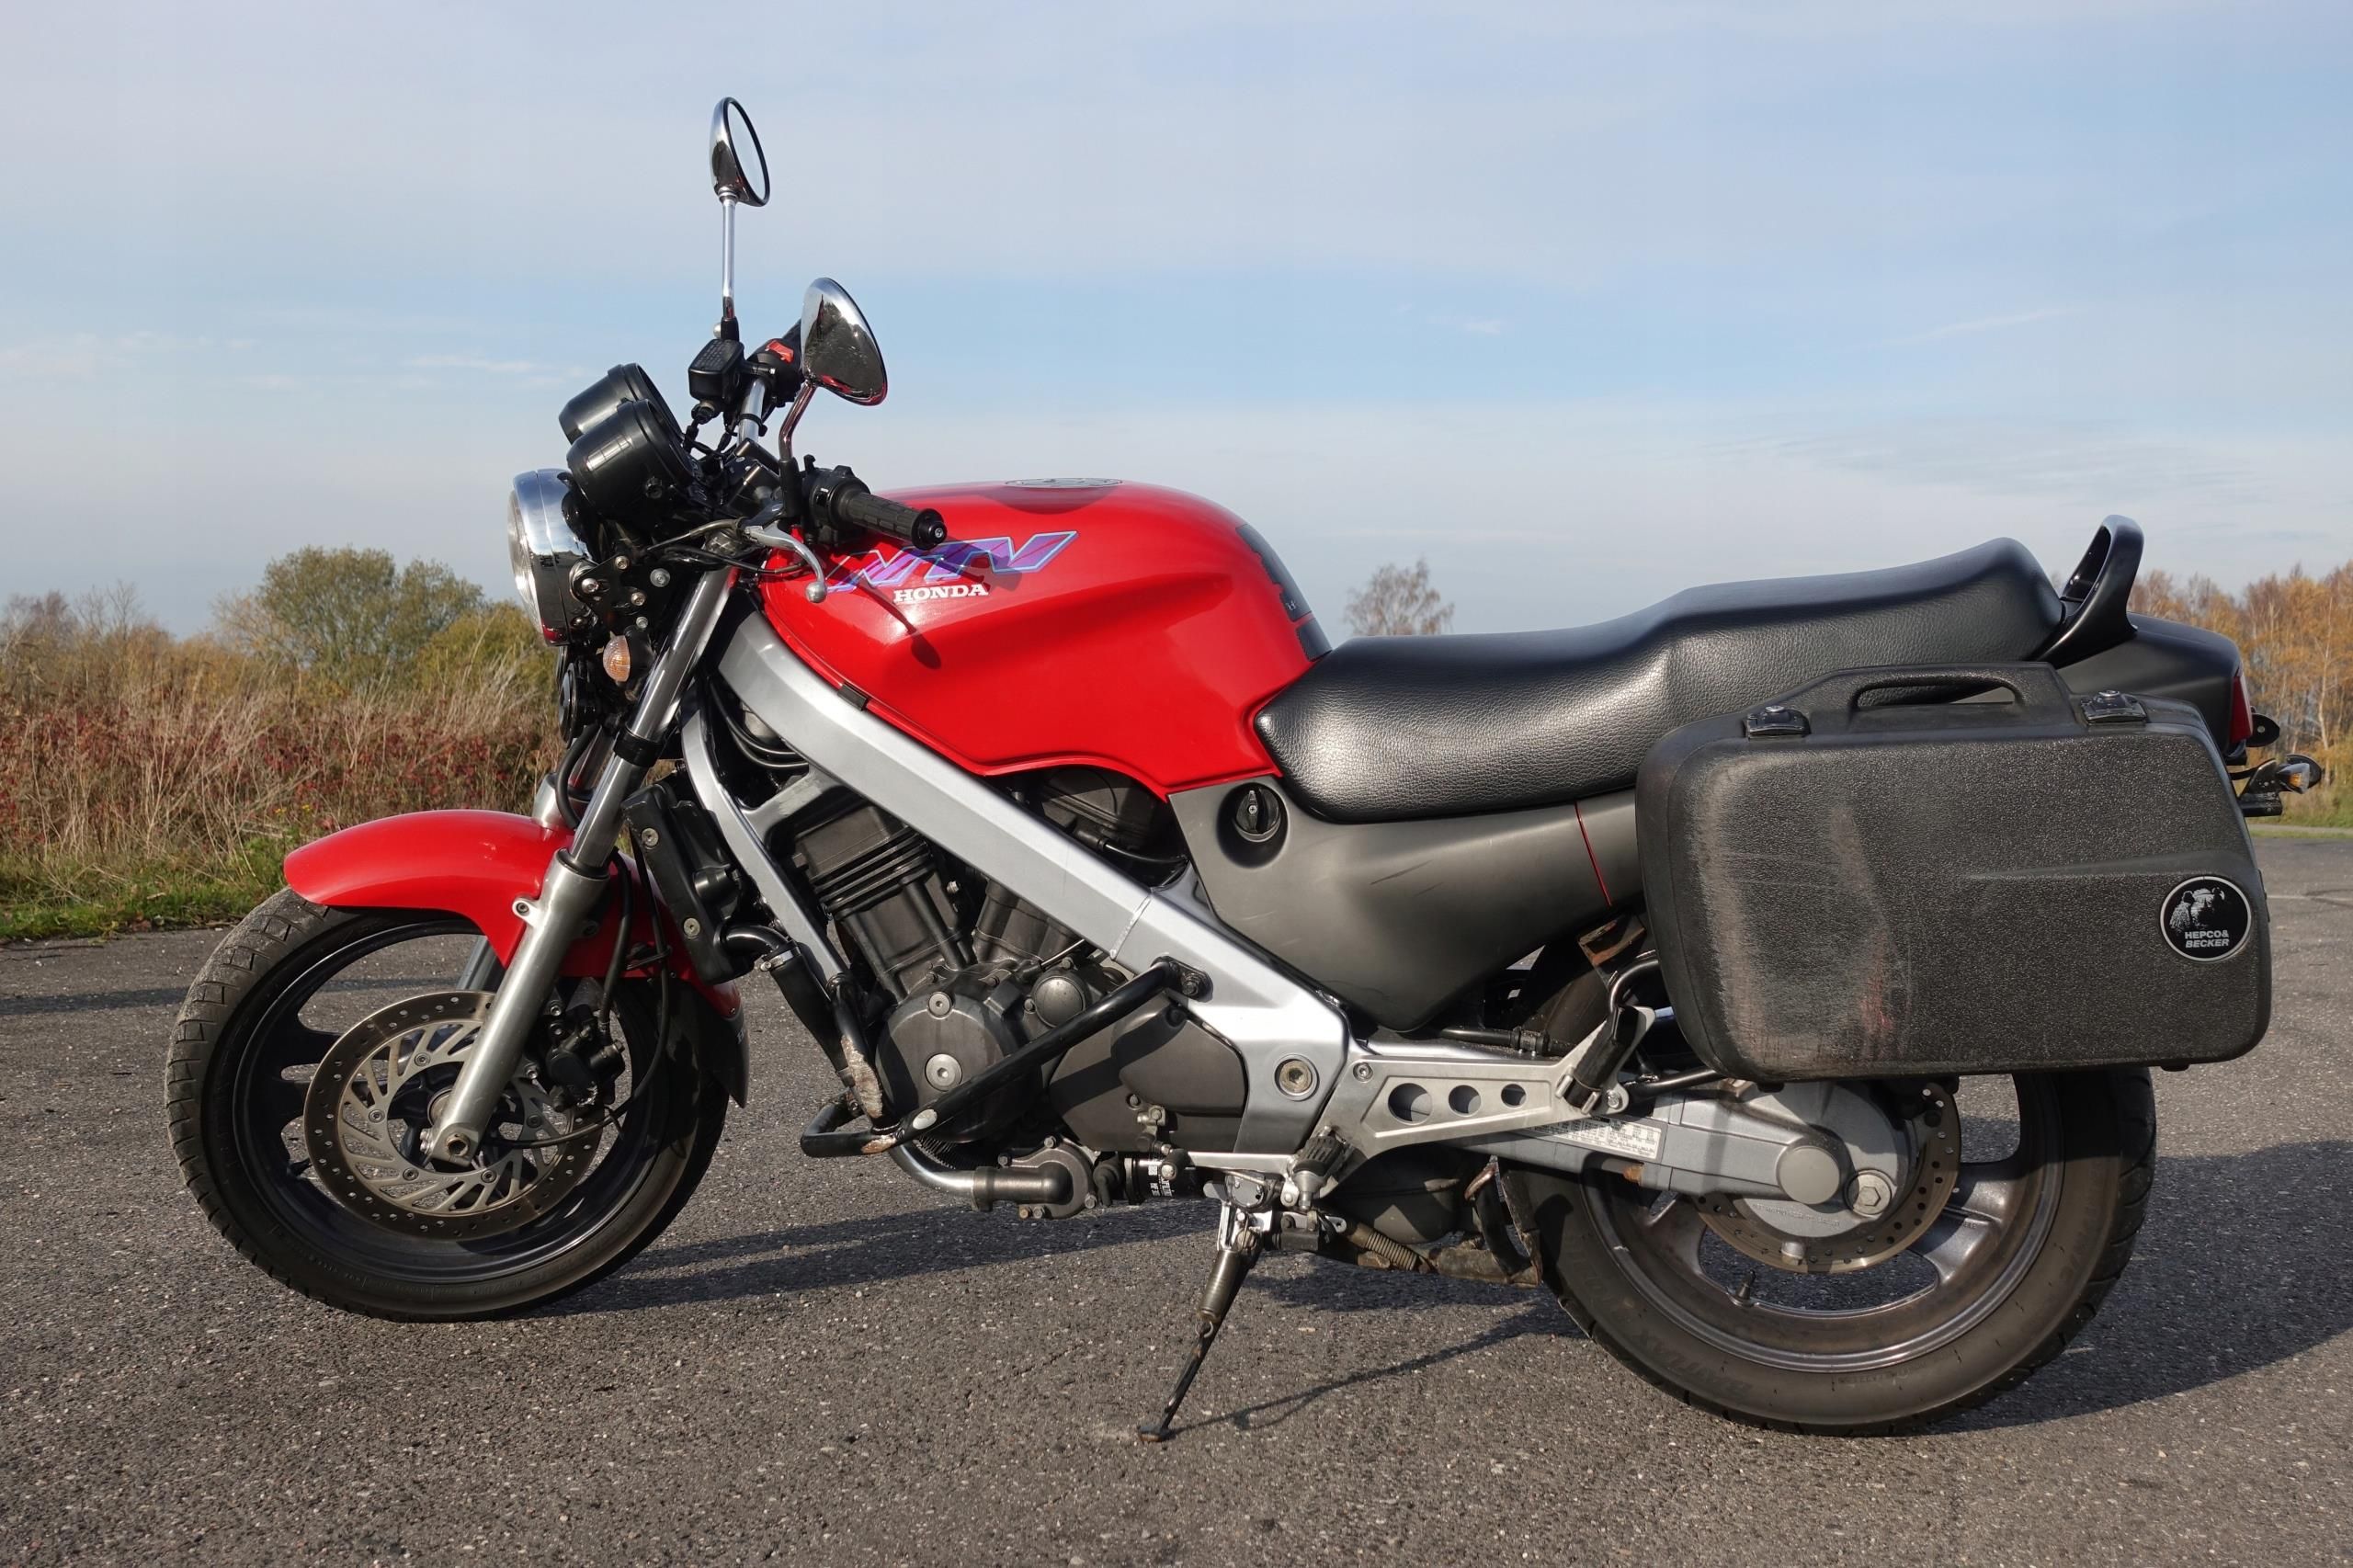 Honda Ntv 650 (Od Motocyklisty) - Opinie I Ceny Na Ceneo.pl